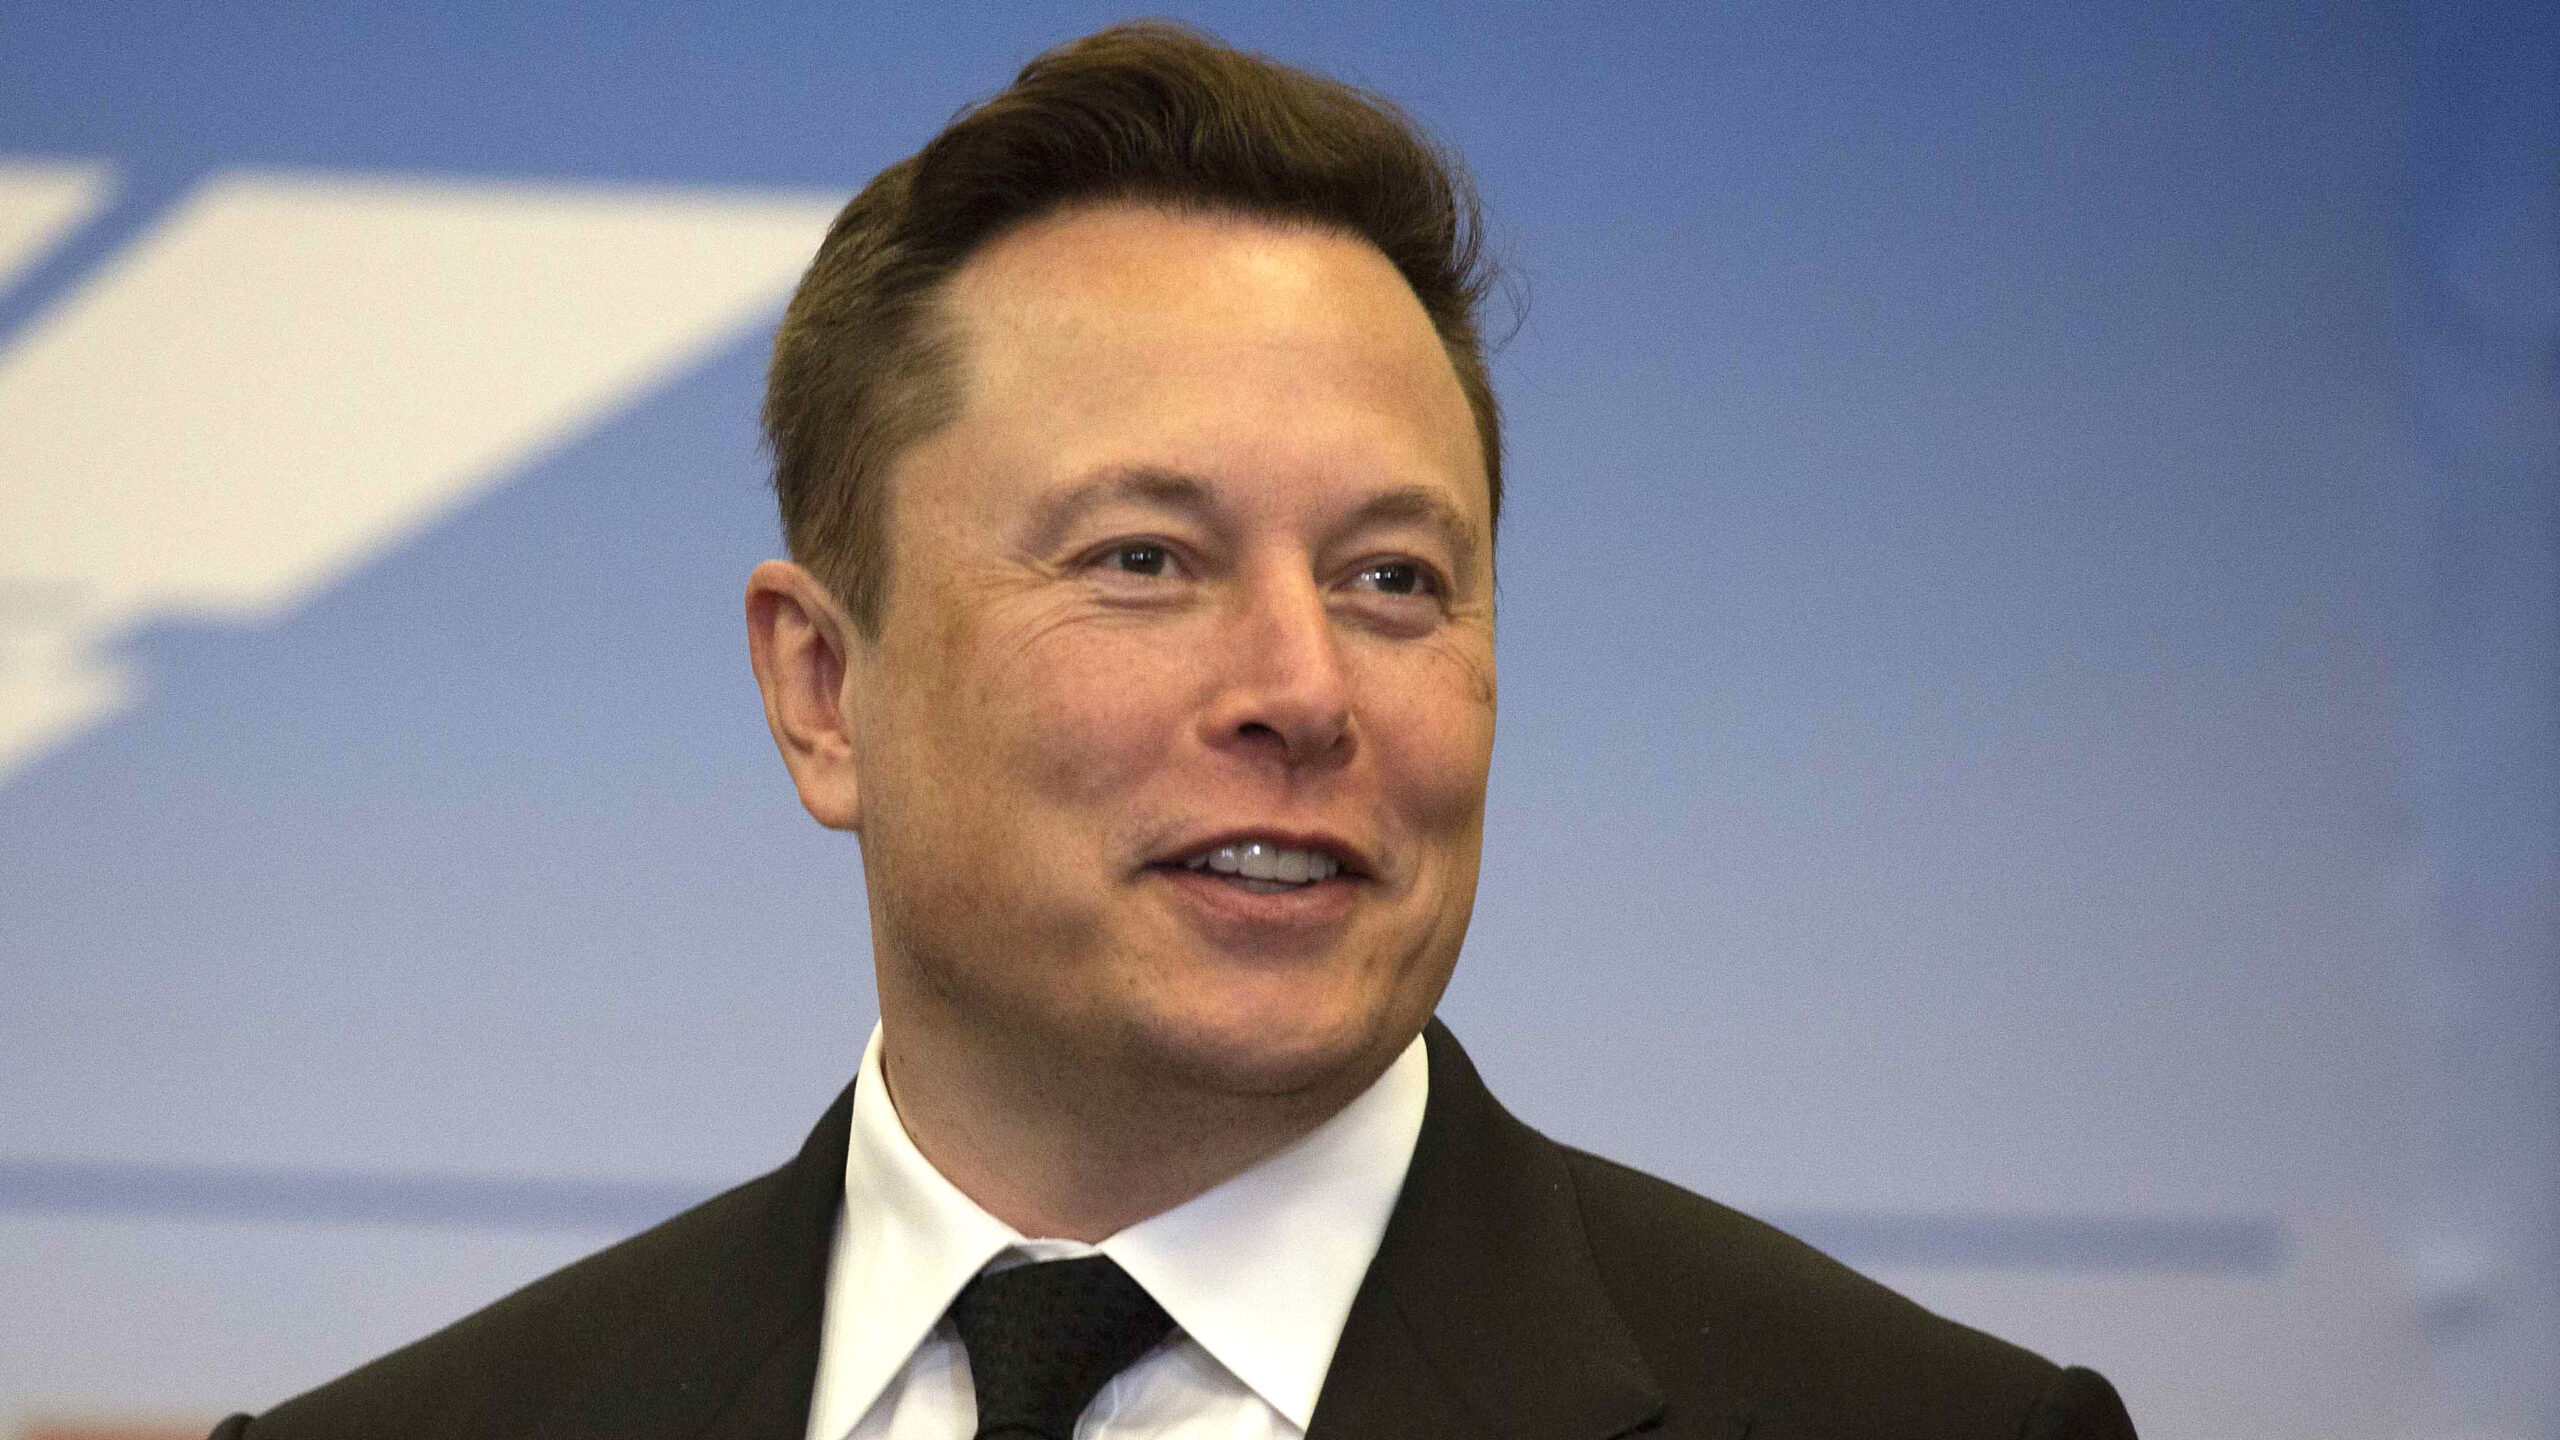 Elon Musk Calls For Regulatory Oversight Of AI To Prevent ‘Danger To The Public’